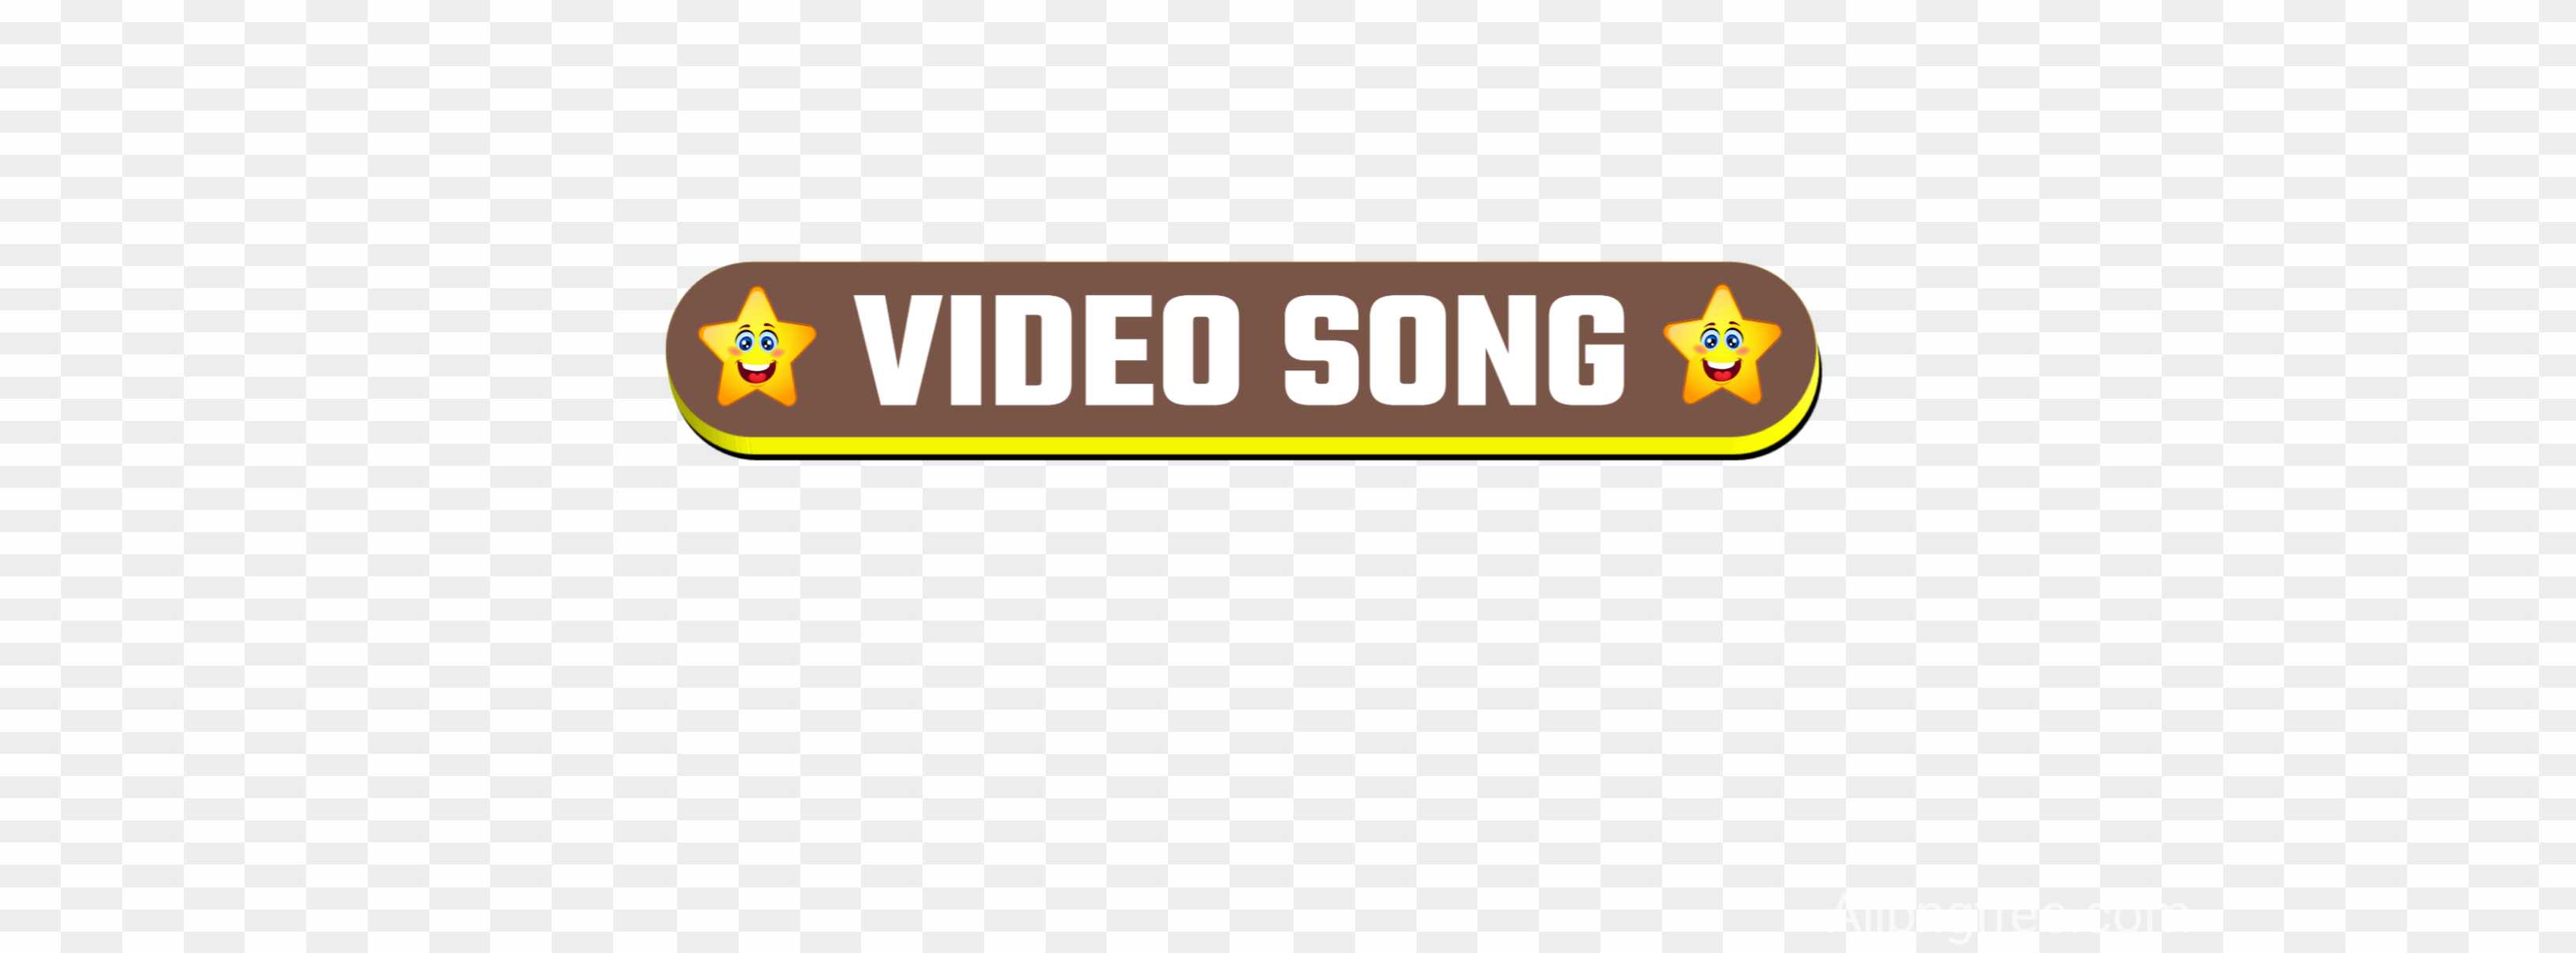 hd video logo png